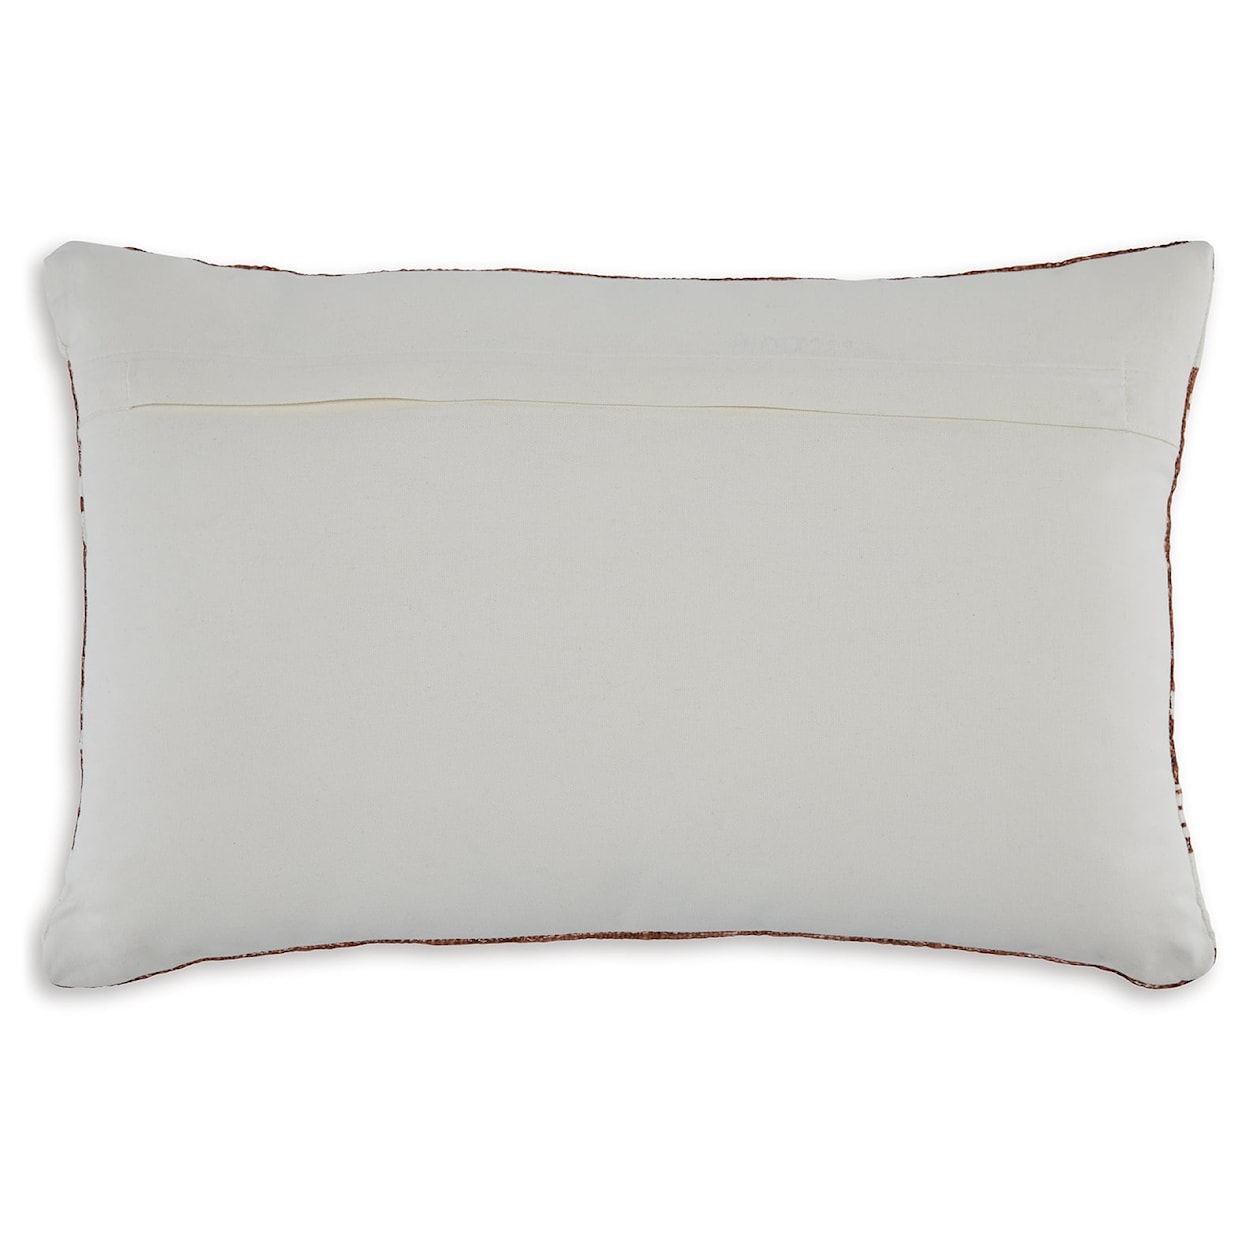 Ashley Signature Design Ackford Pillow